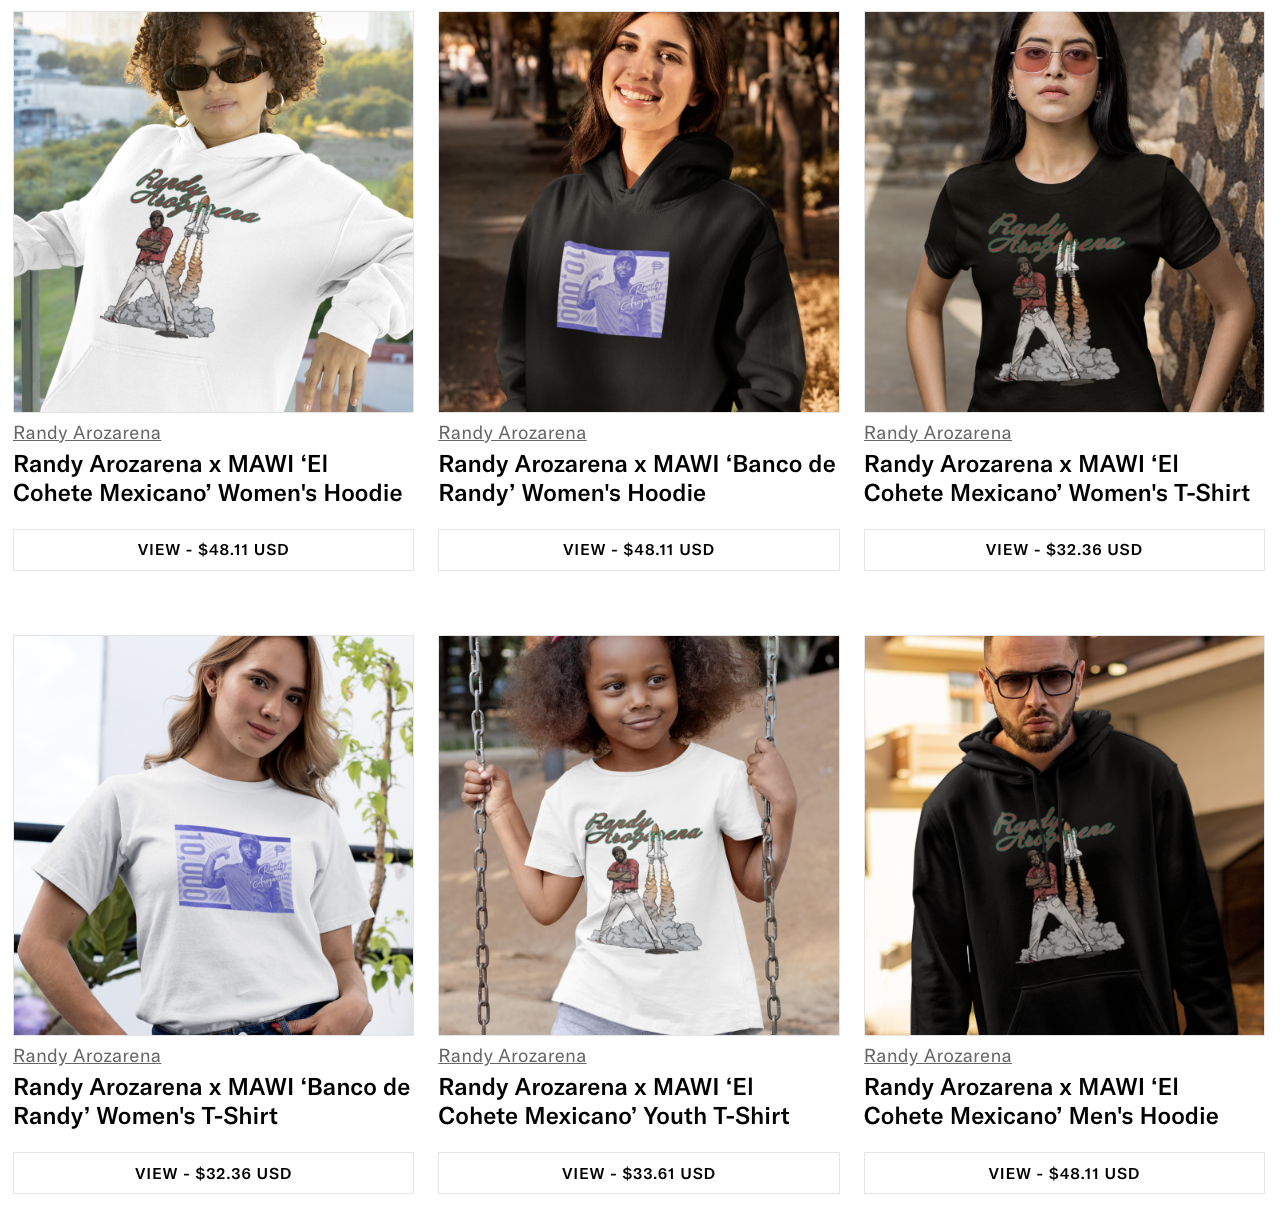 Female Randy Arozarena x MAWI 'El Cohete Mexicano' Women's T-Shirt